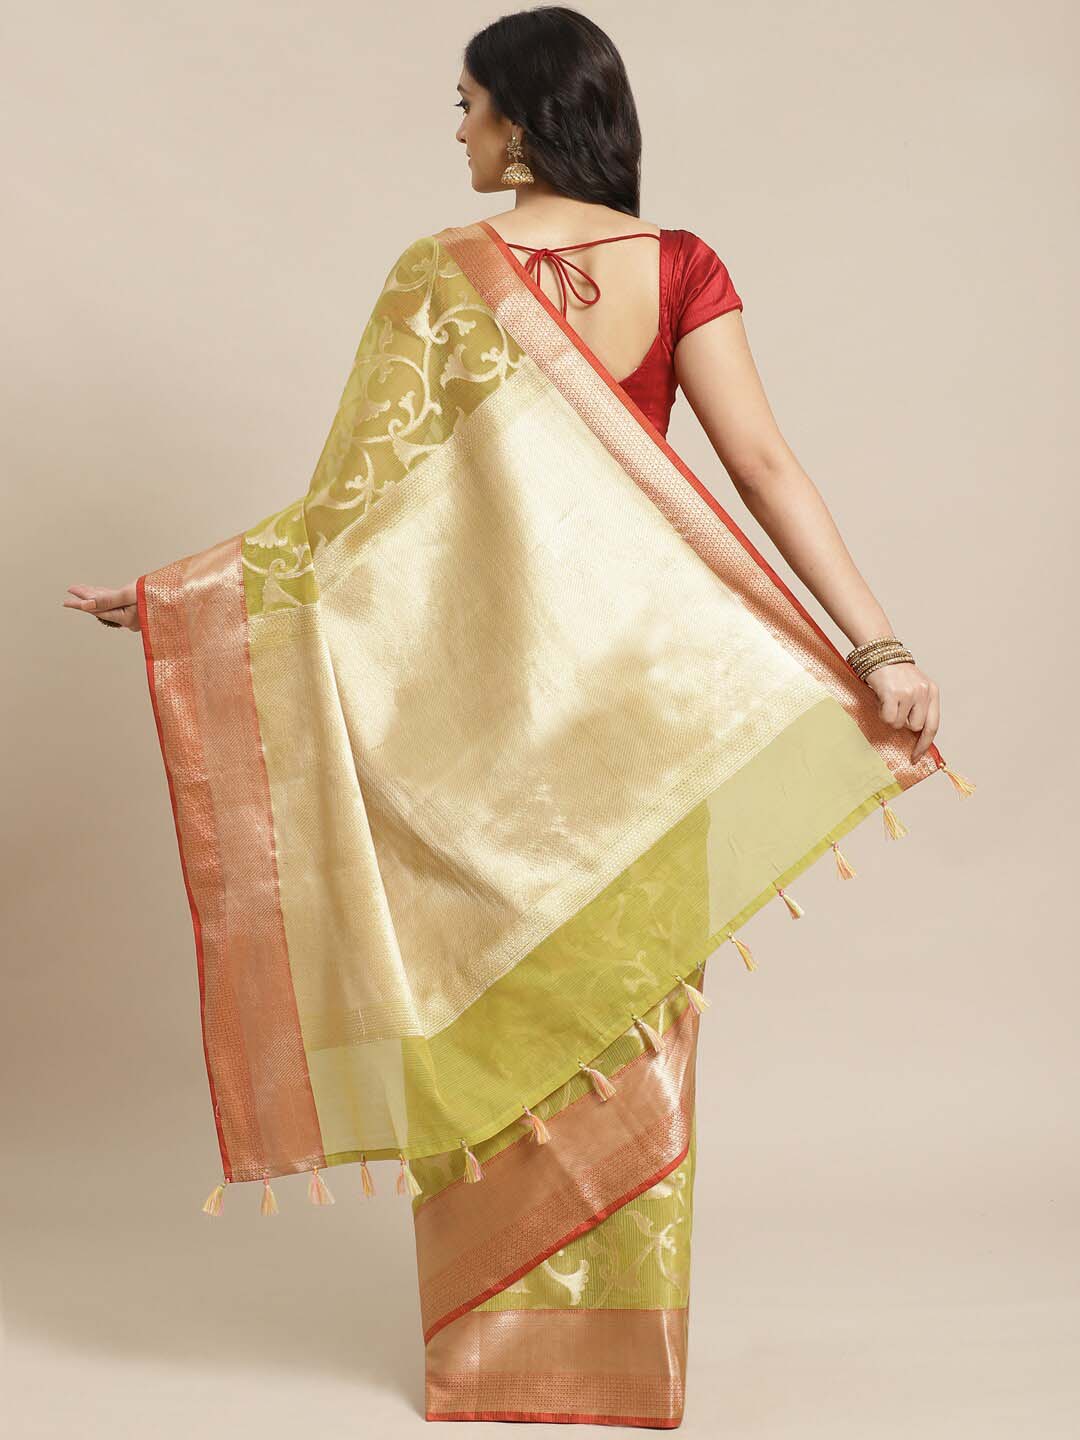 Indethnic Banarasi Lime Green Woven Design Festive Wear Saree - View 2